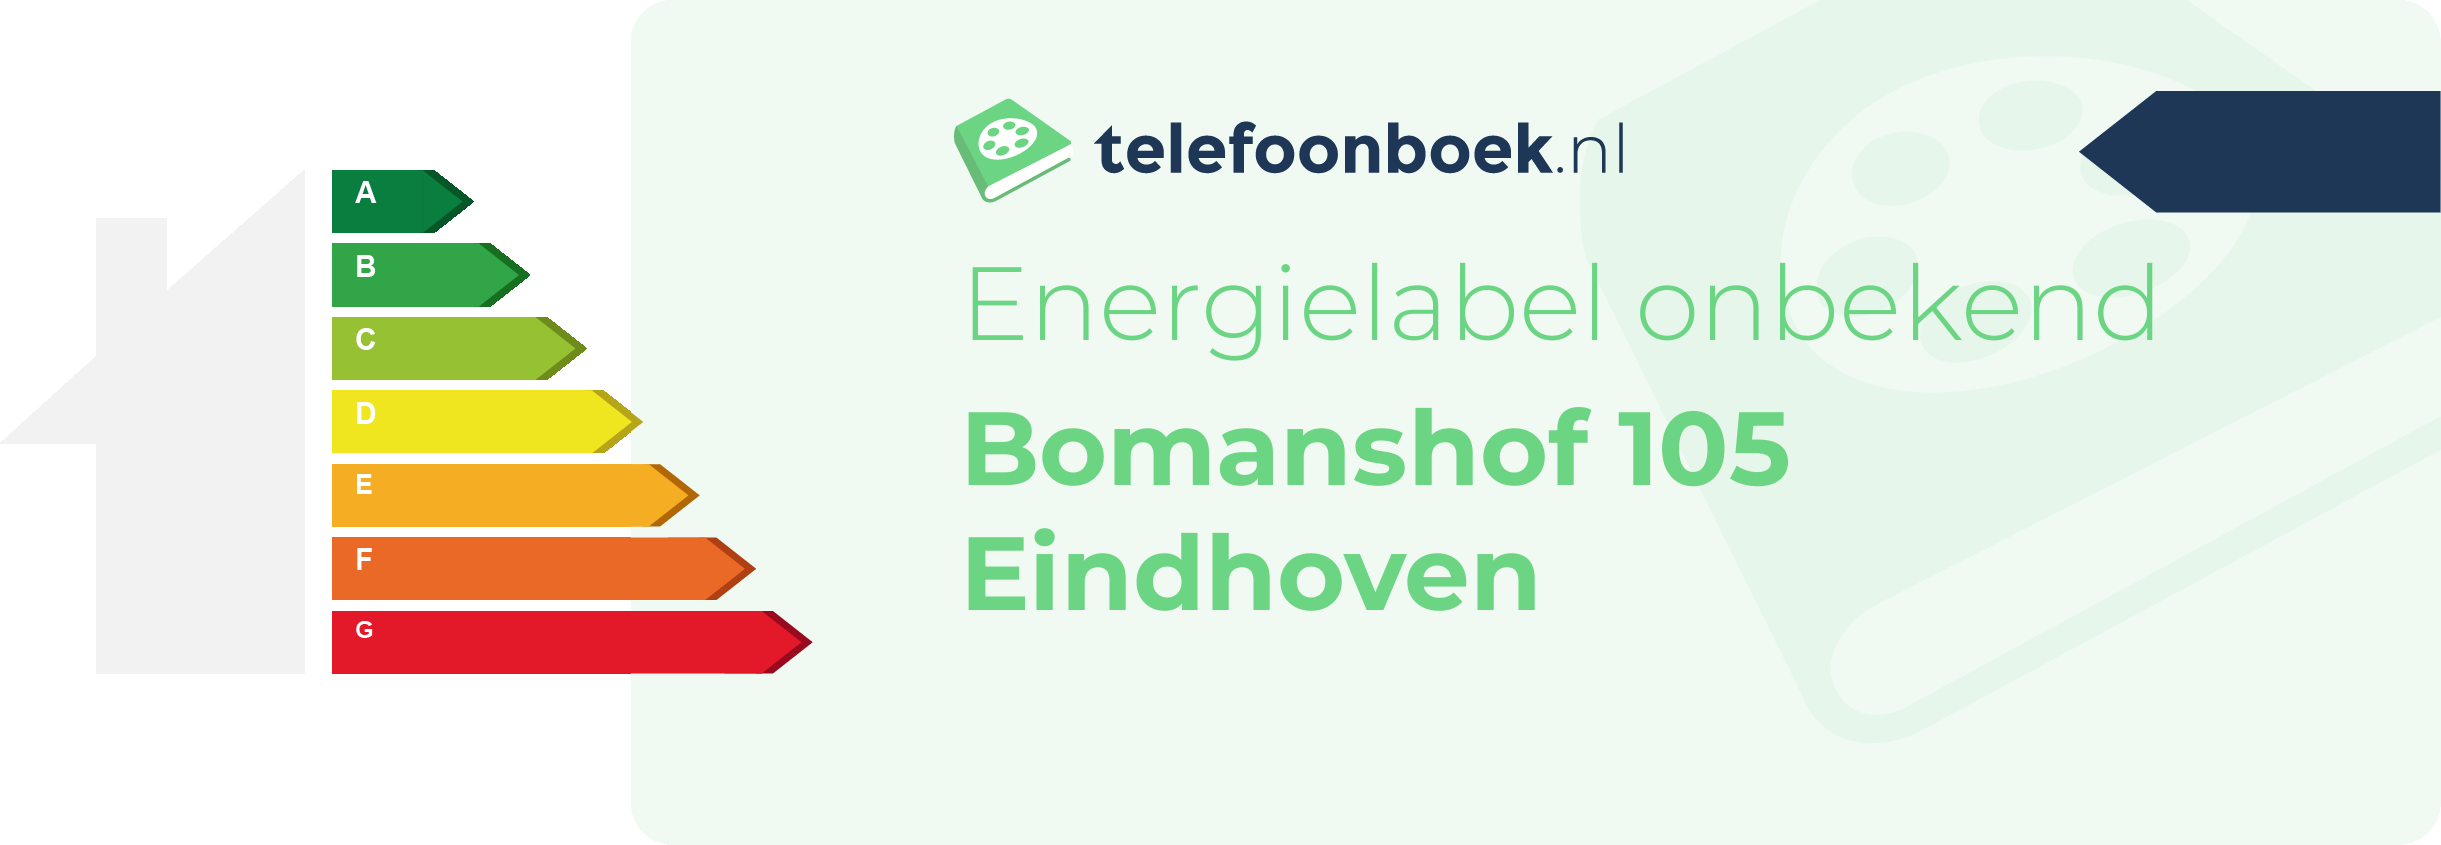 Energielabel Bomanshof 105 Eindhoven